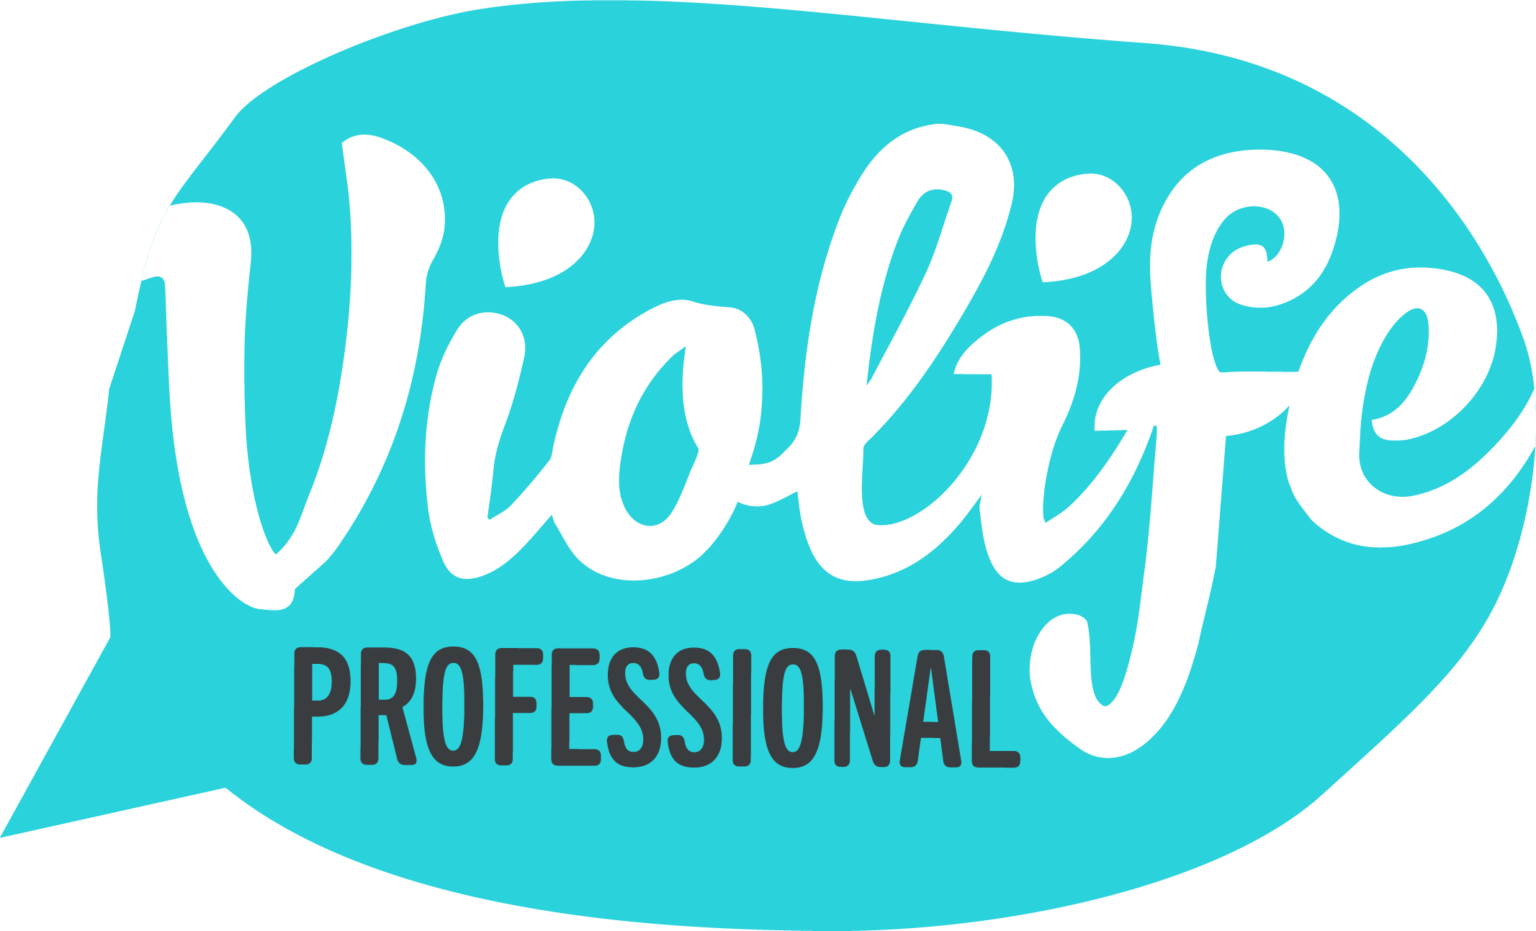 Upfield_Violife_Professional_Logos_1.0-01